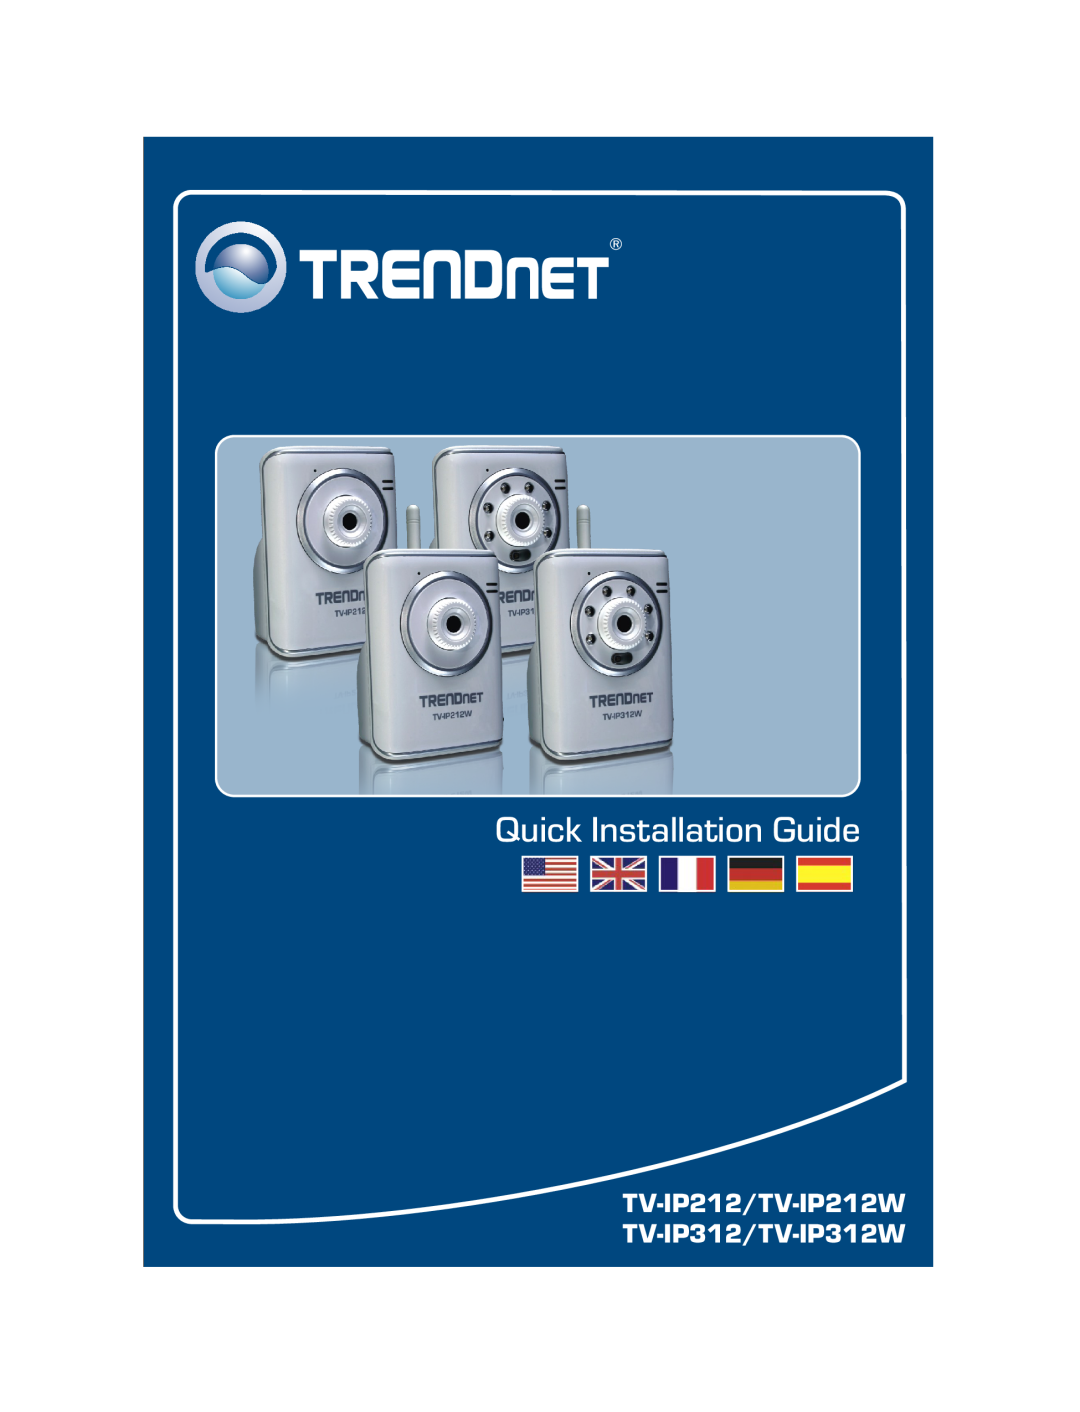 TRENDnet TRENDNET, tv-ip400 manual Quick Installation Guide, TV-IP400 TV-IP400W 